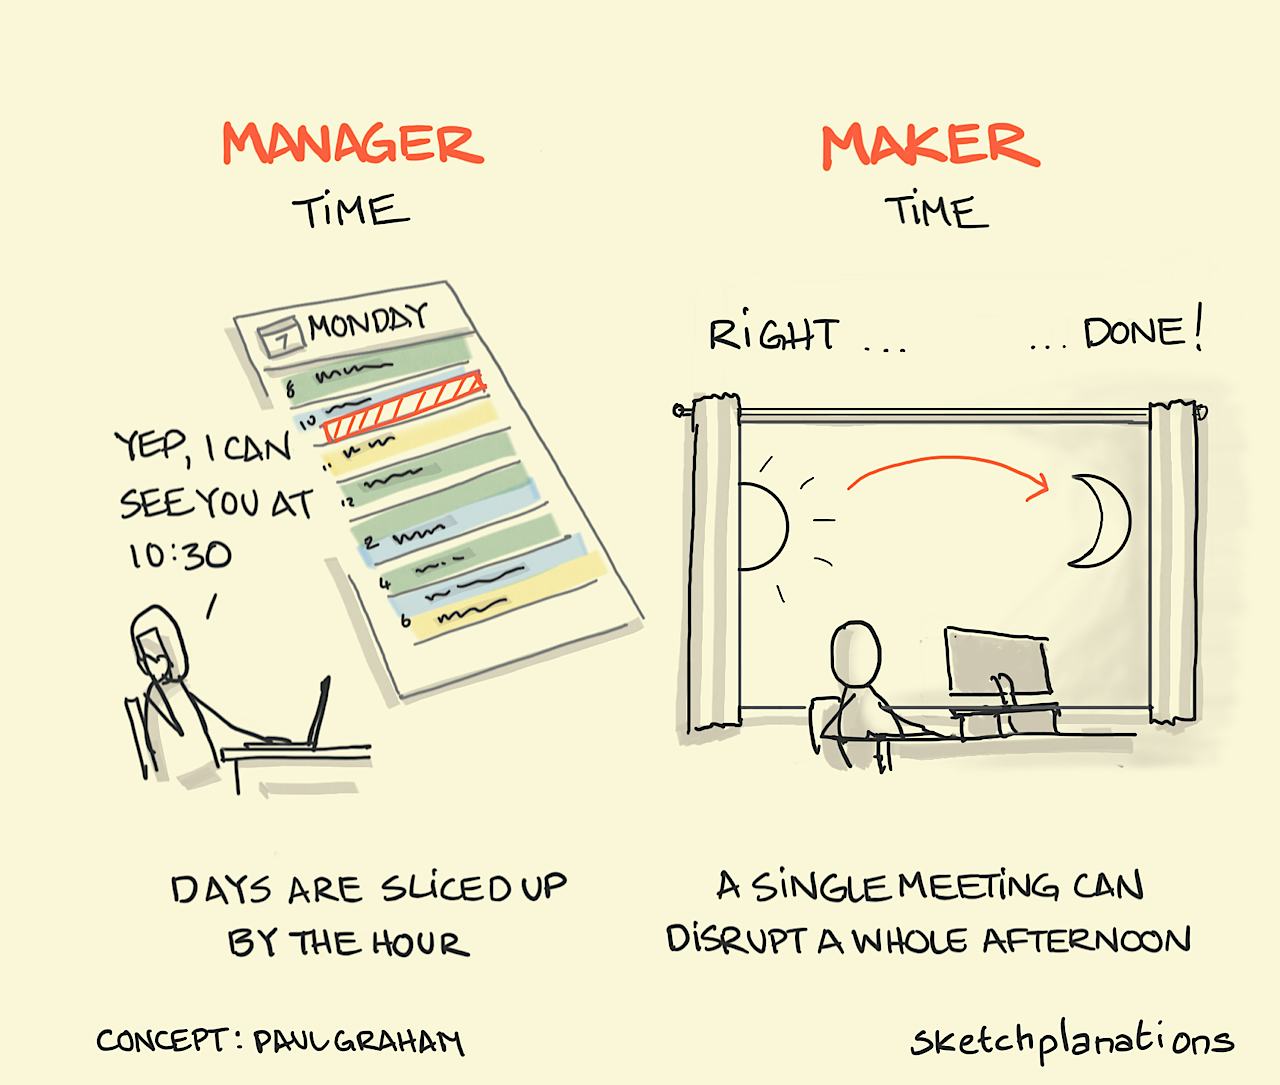 Manager time, maker time - Sketchplanations